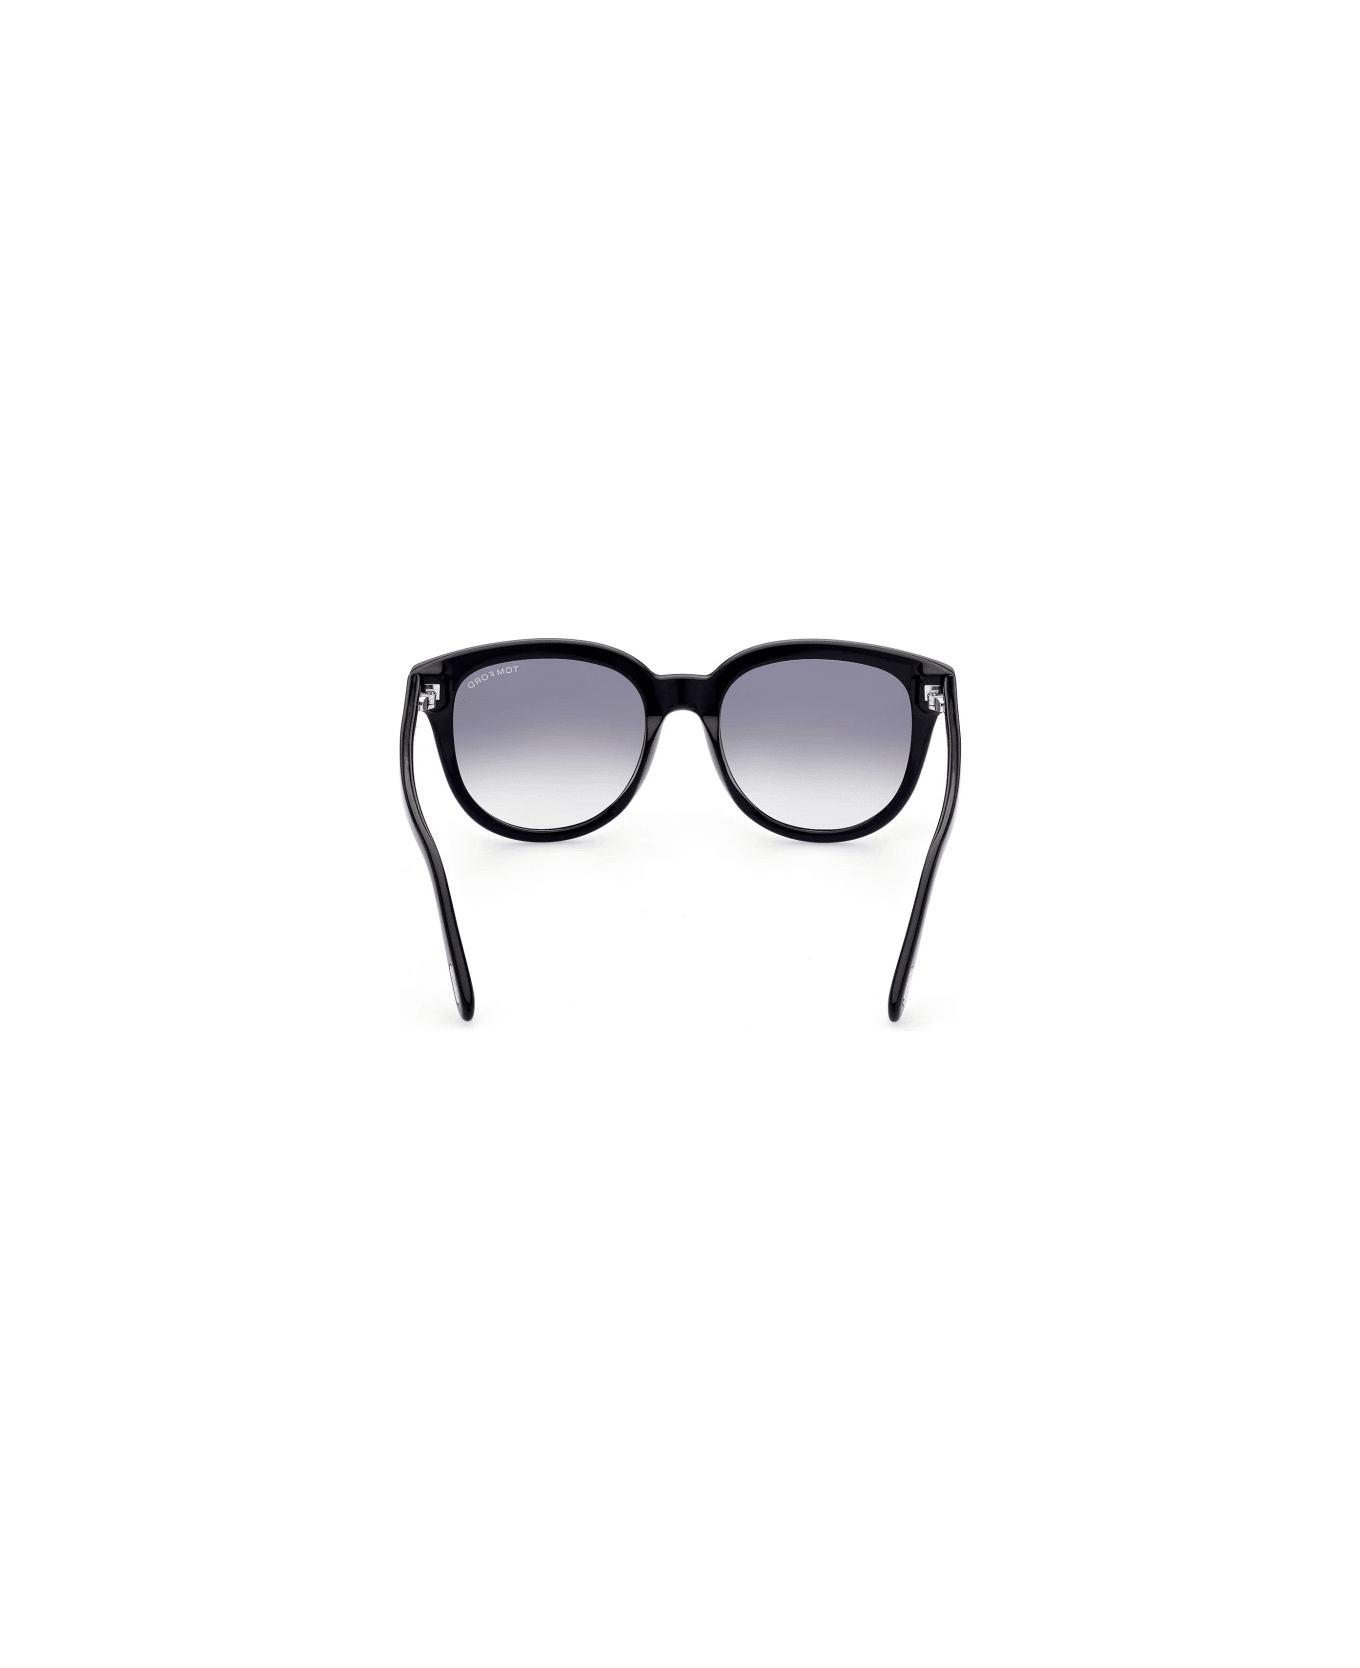 Tom Ford Eyewear TF914 01B Sunglasses